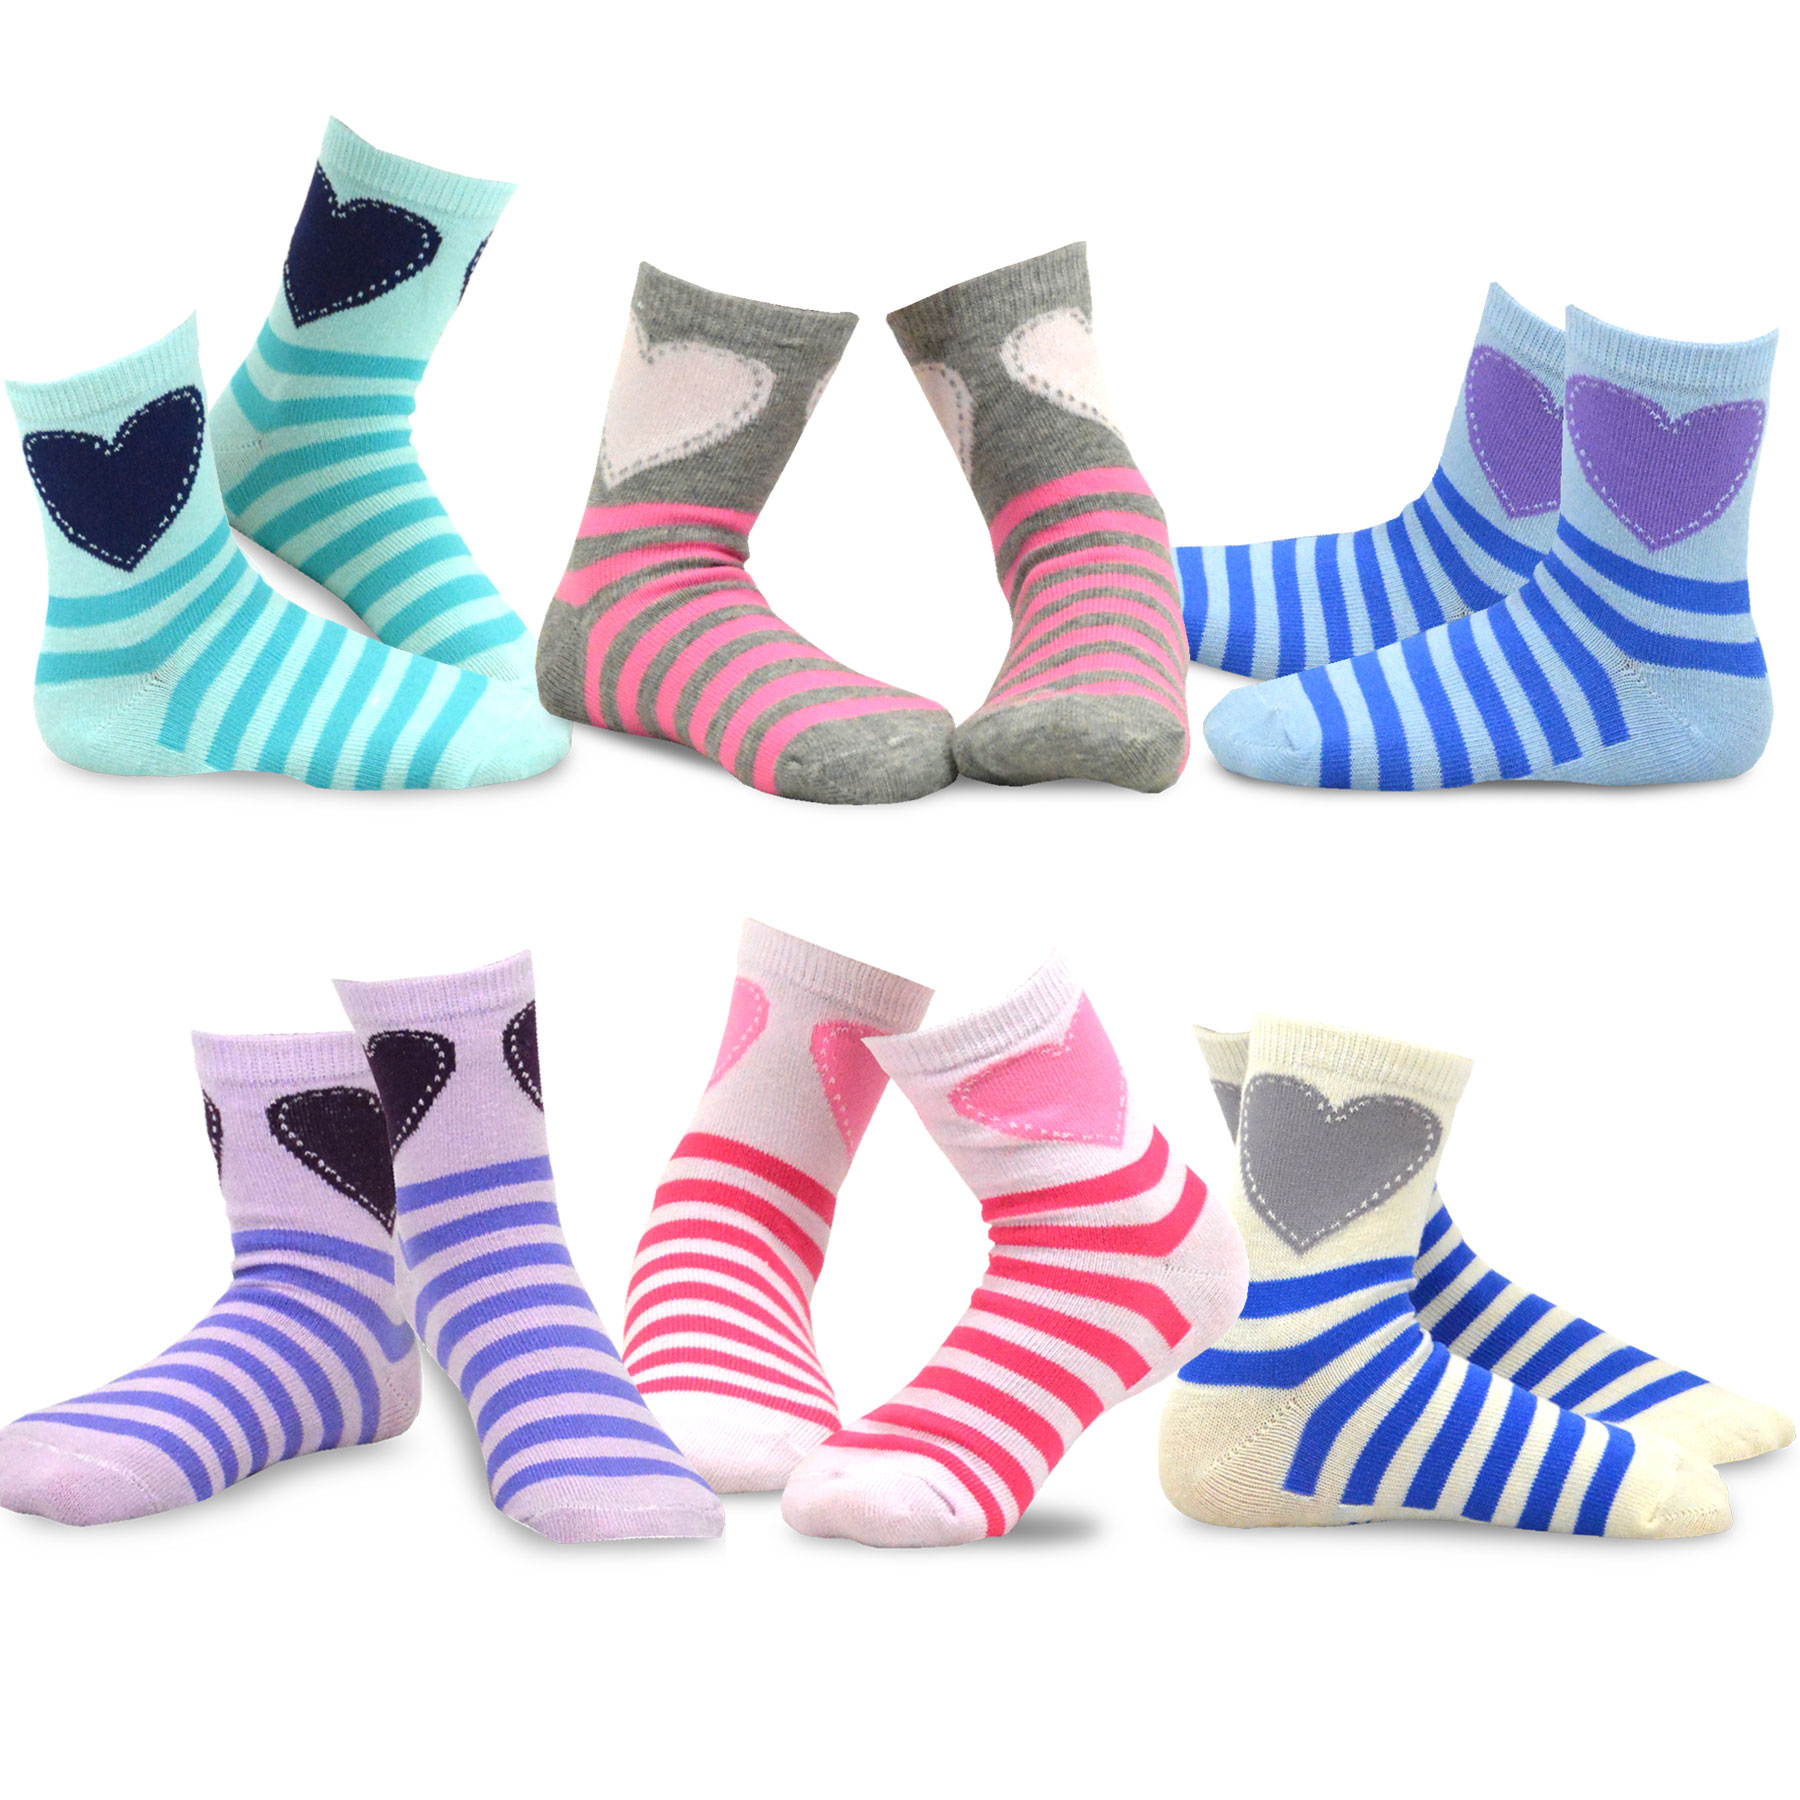 TeeHee Kids Cotton Fashion Crew Socks 6 Pair Pack for Girls - image 1 of 7